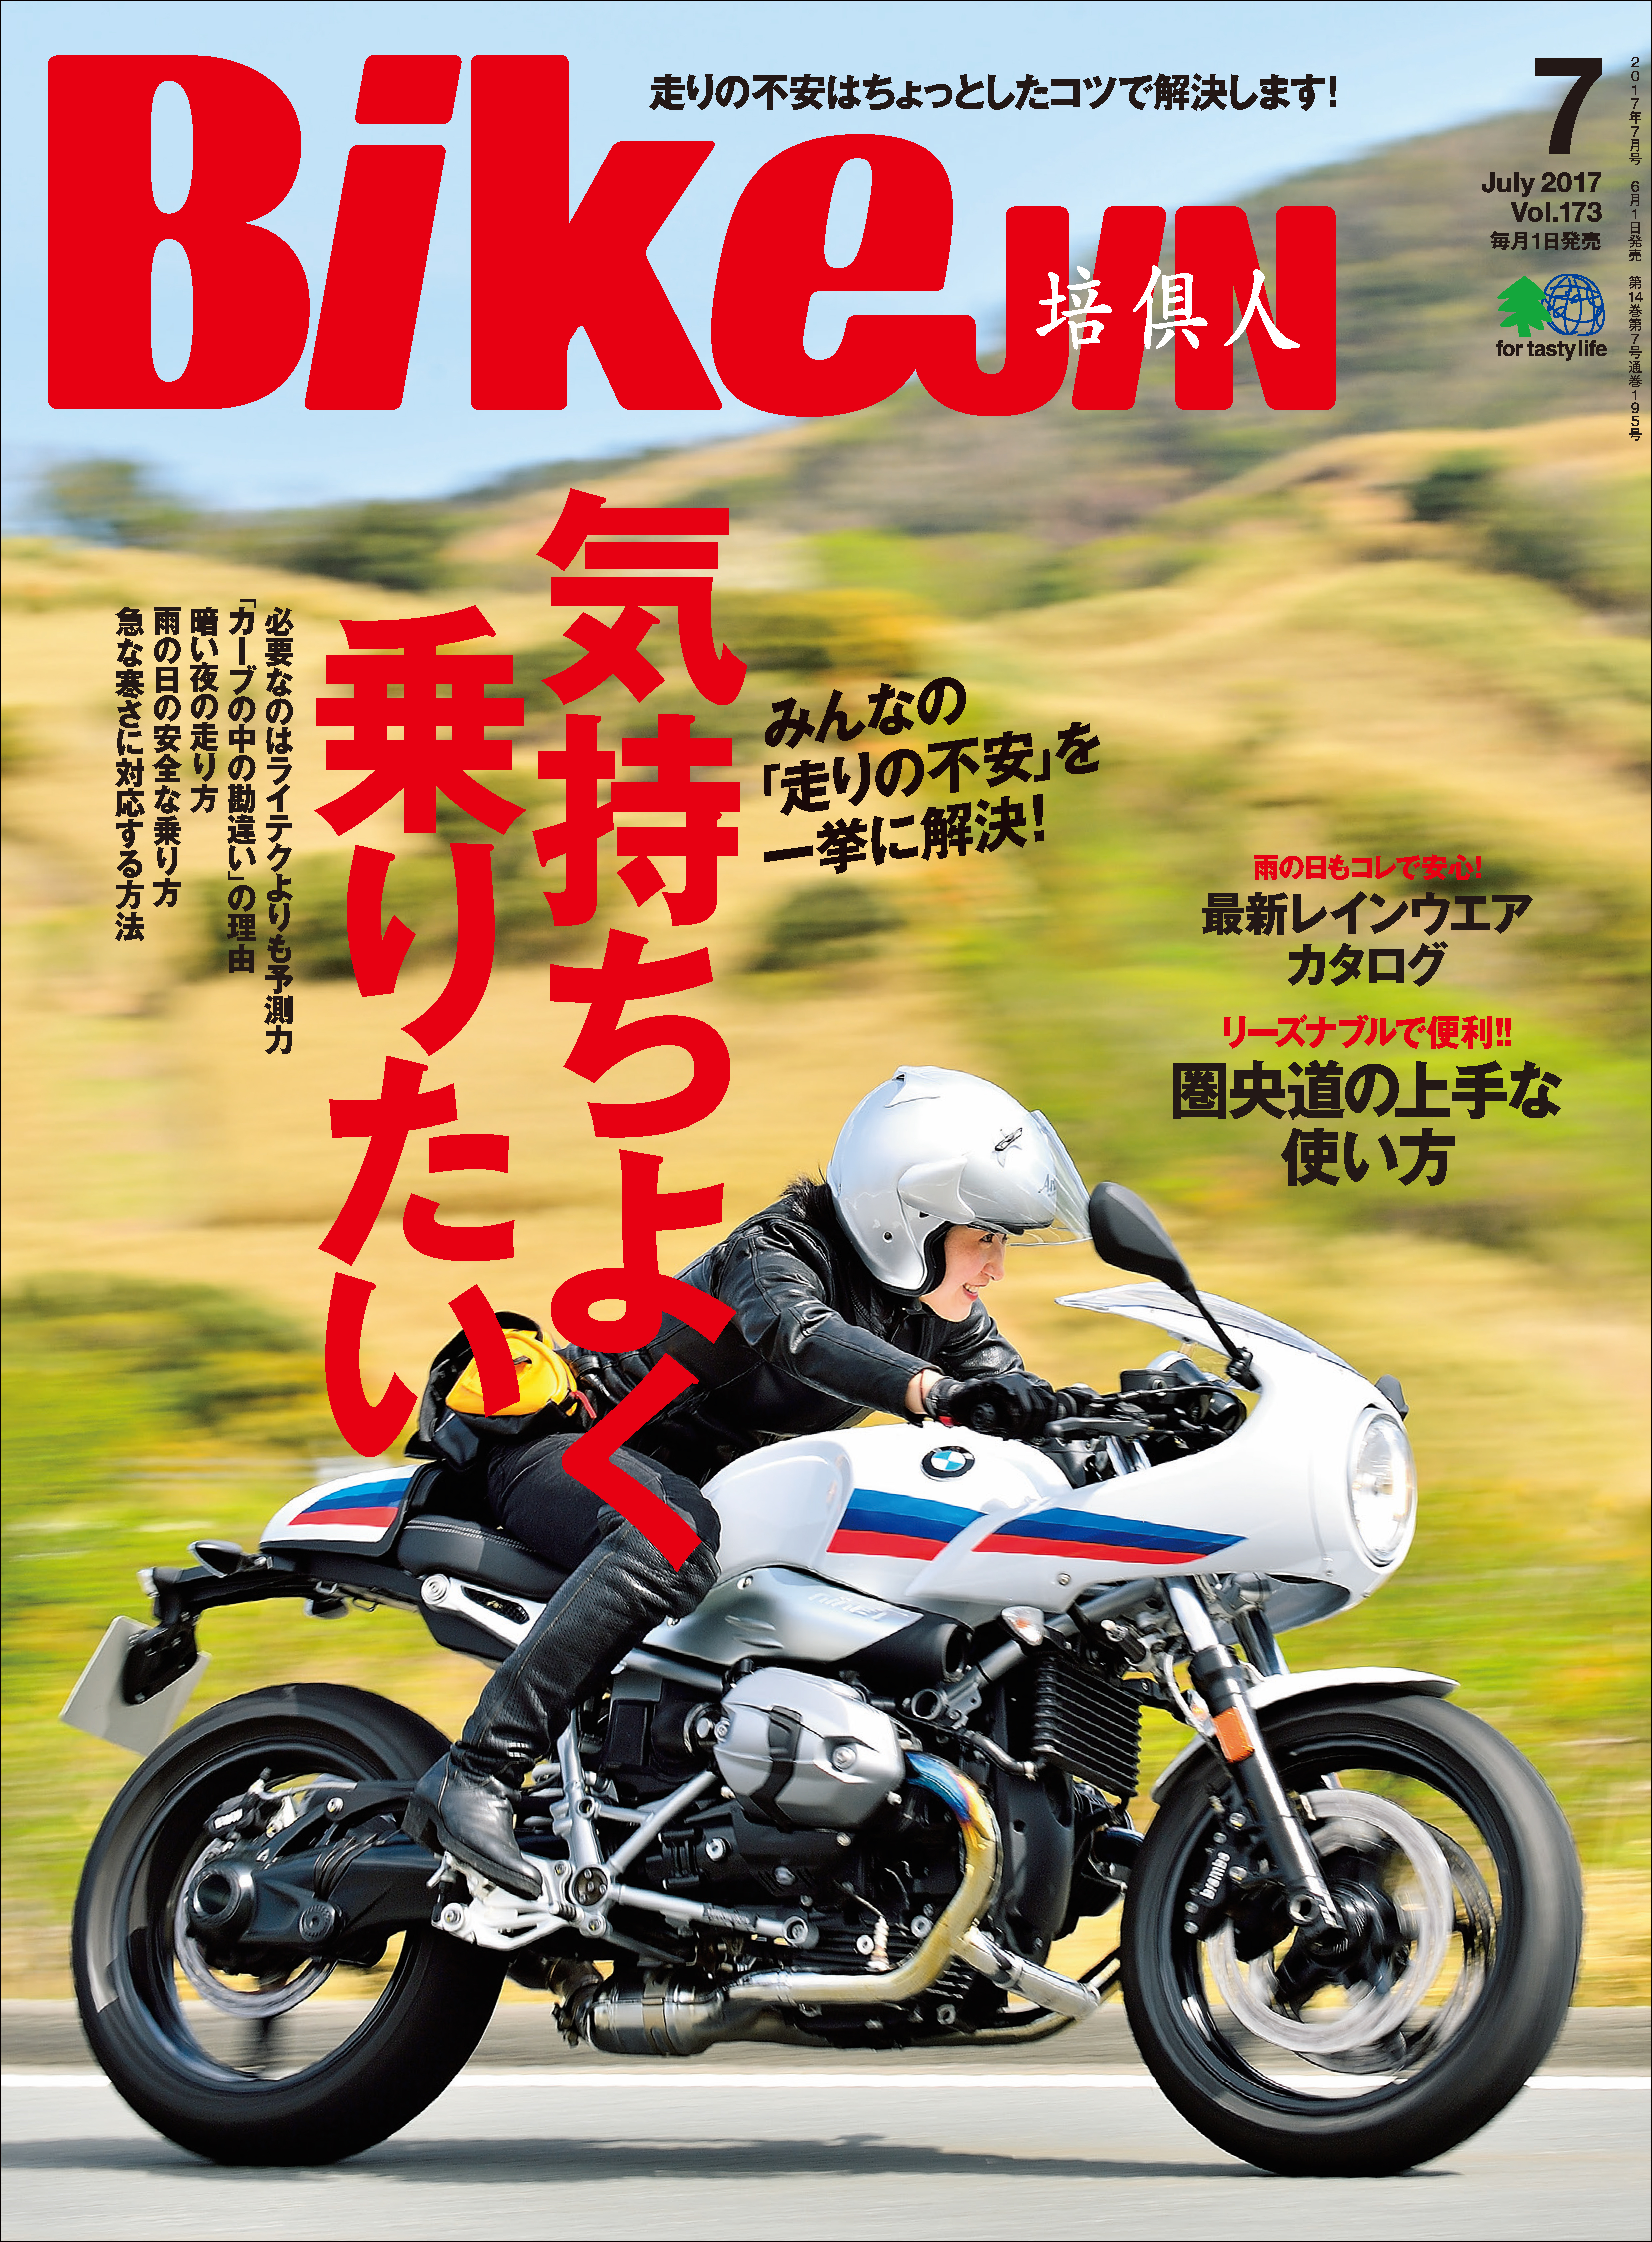 BikeJIN 培倶人（バイクジン） 2014年8月号 Vol.138